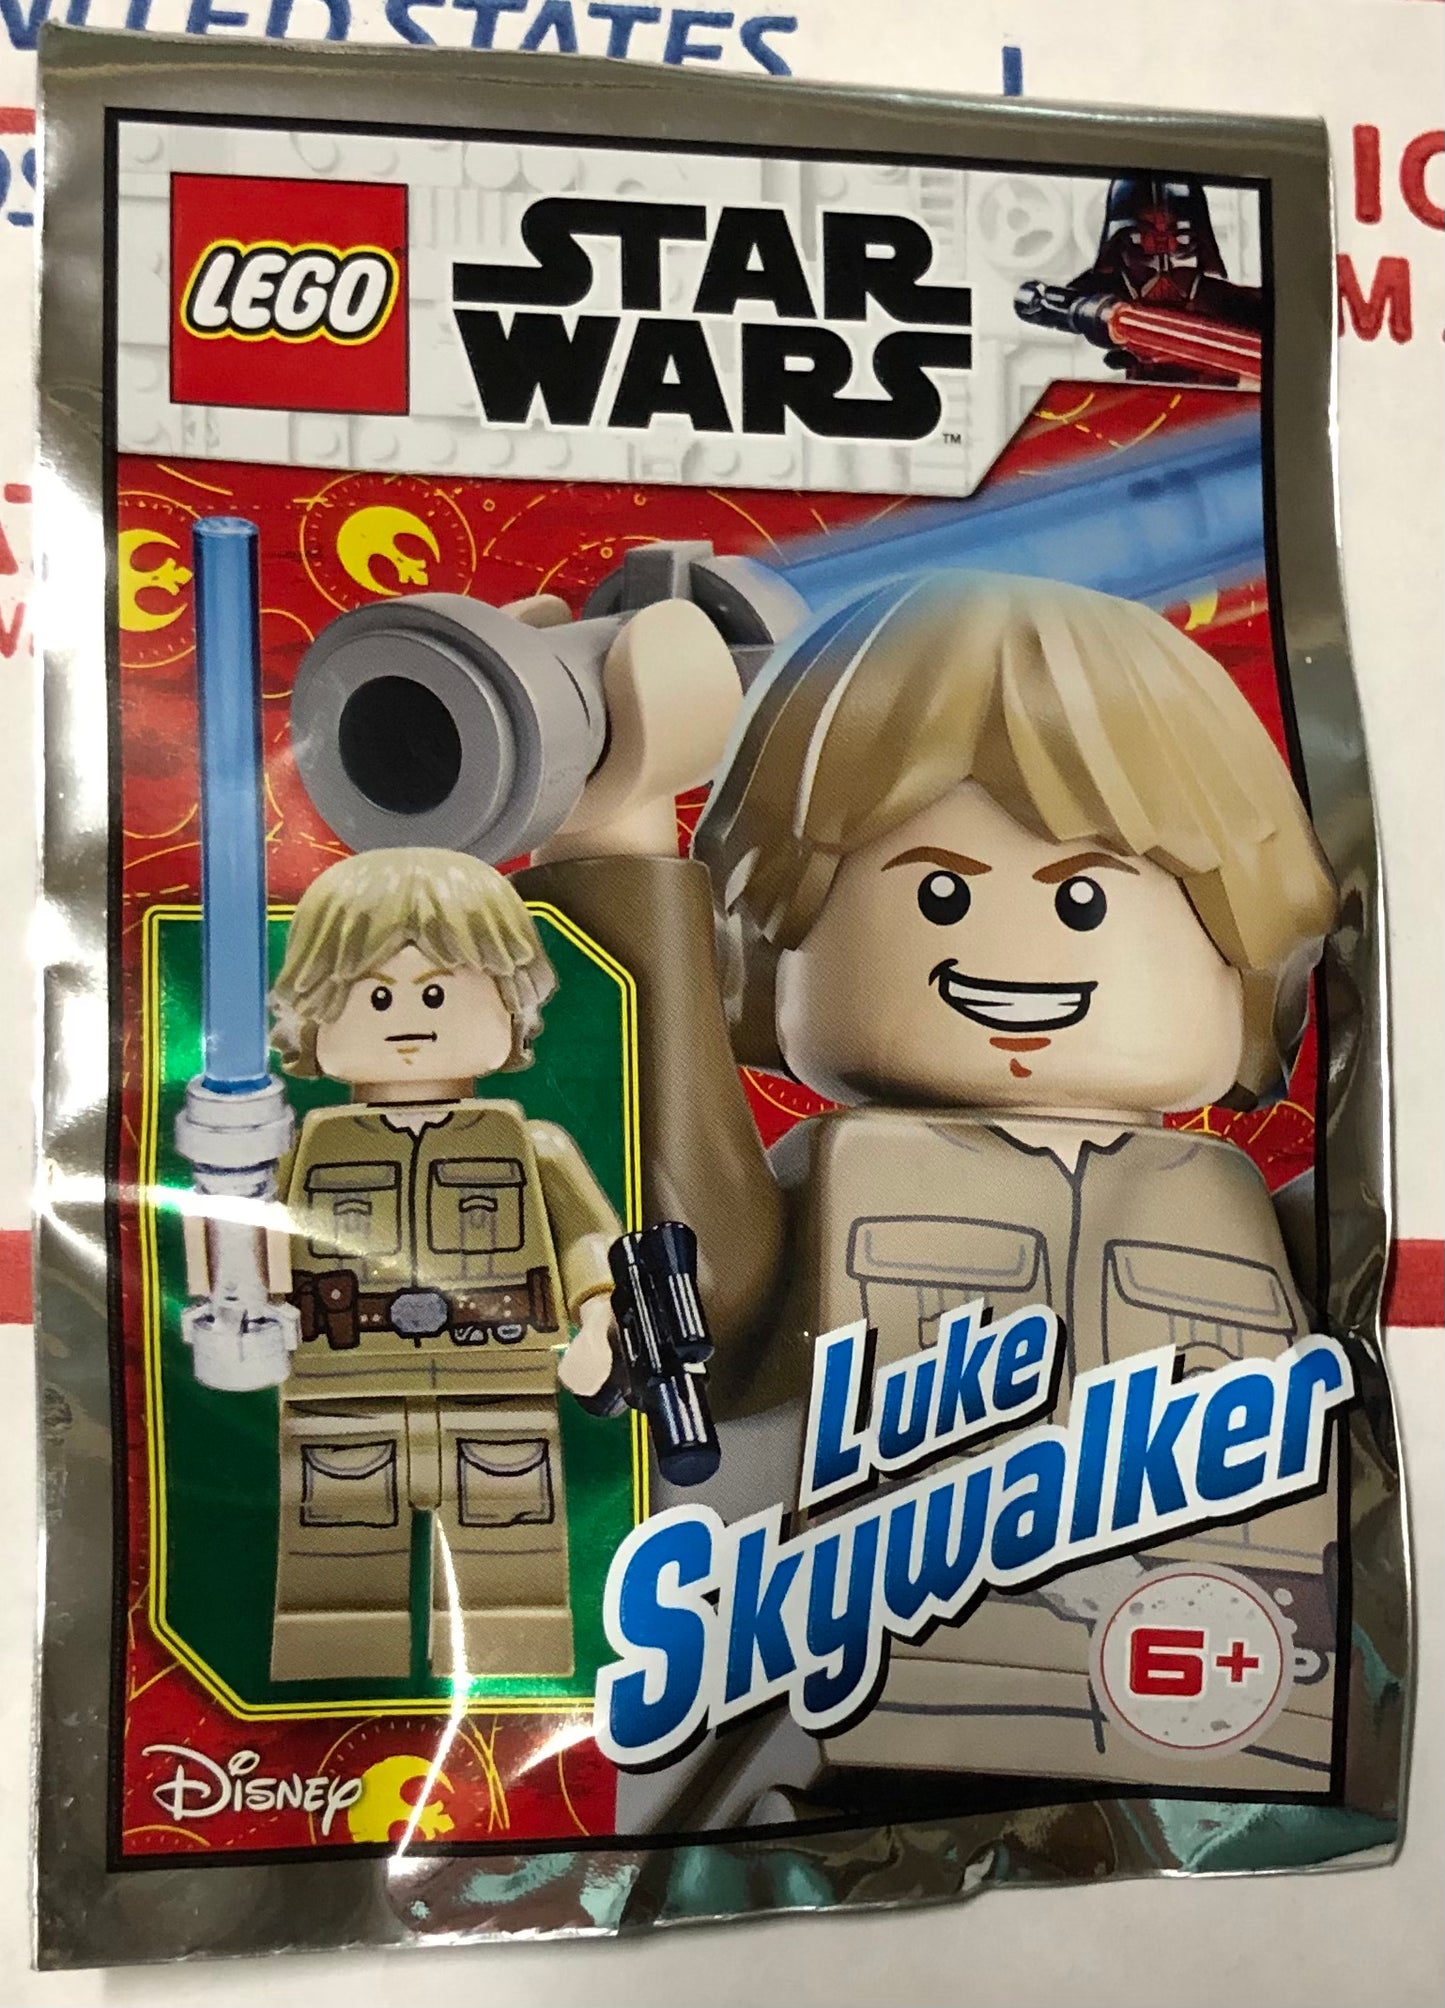 LEGO Star Wars Bespin Luke Skywalker Minifigure Foil Pack Bag Set 912065